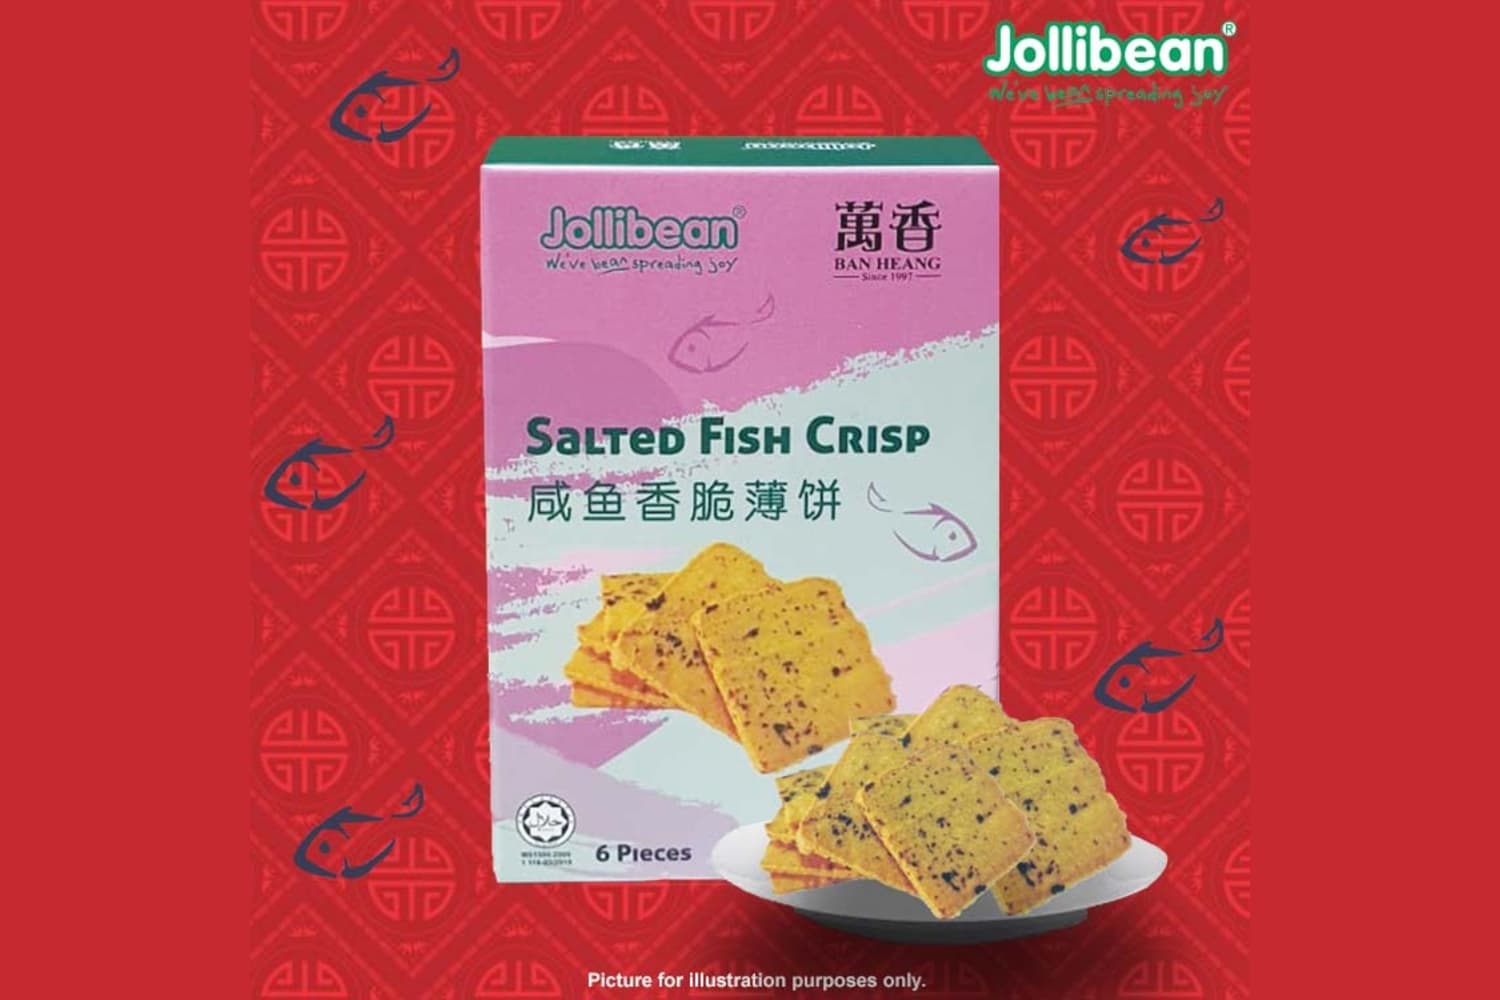 1 x Salted Egg Crisp [Limited Stock] at Jollibean - Get Deals, Cashback and Rewards with ShopBack GO